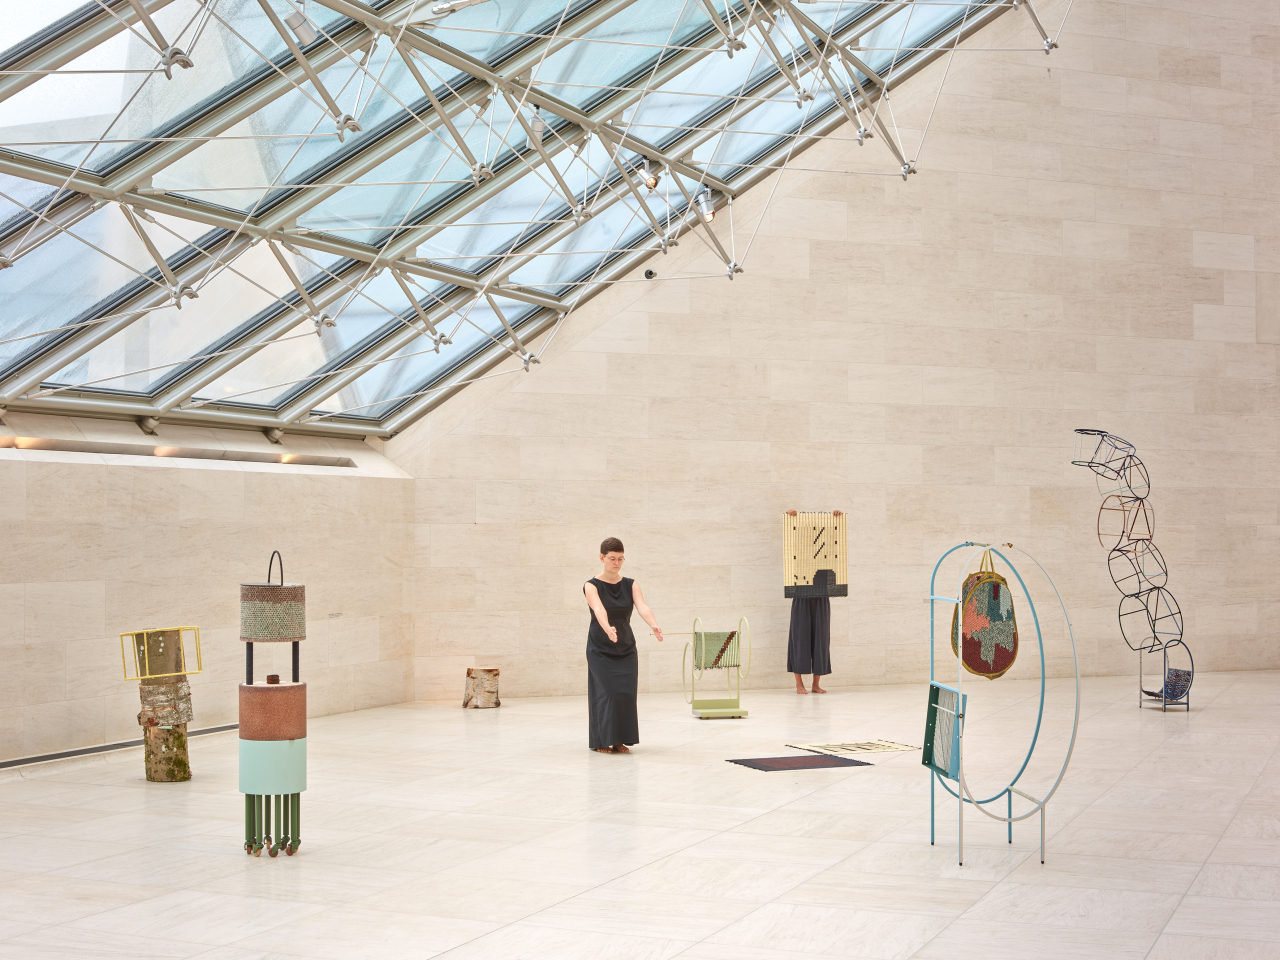 An installation view of “Suki Seokyeong Kang Prix Baloise” in 2019 at the Contemporary Art Museum of Luxembourg (Studio Suki Seokyeong Kang)